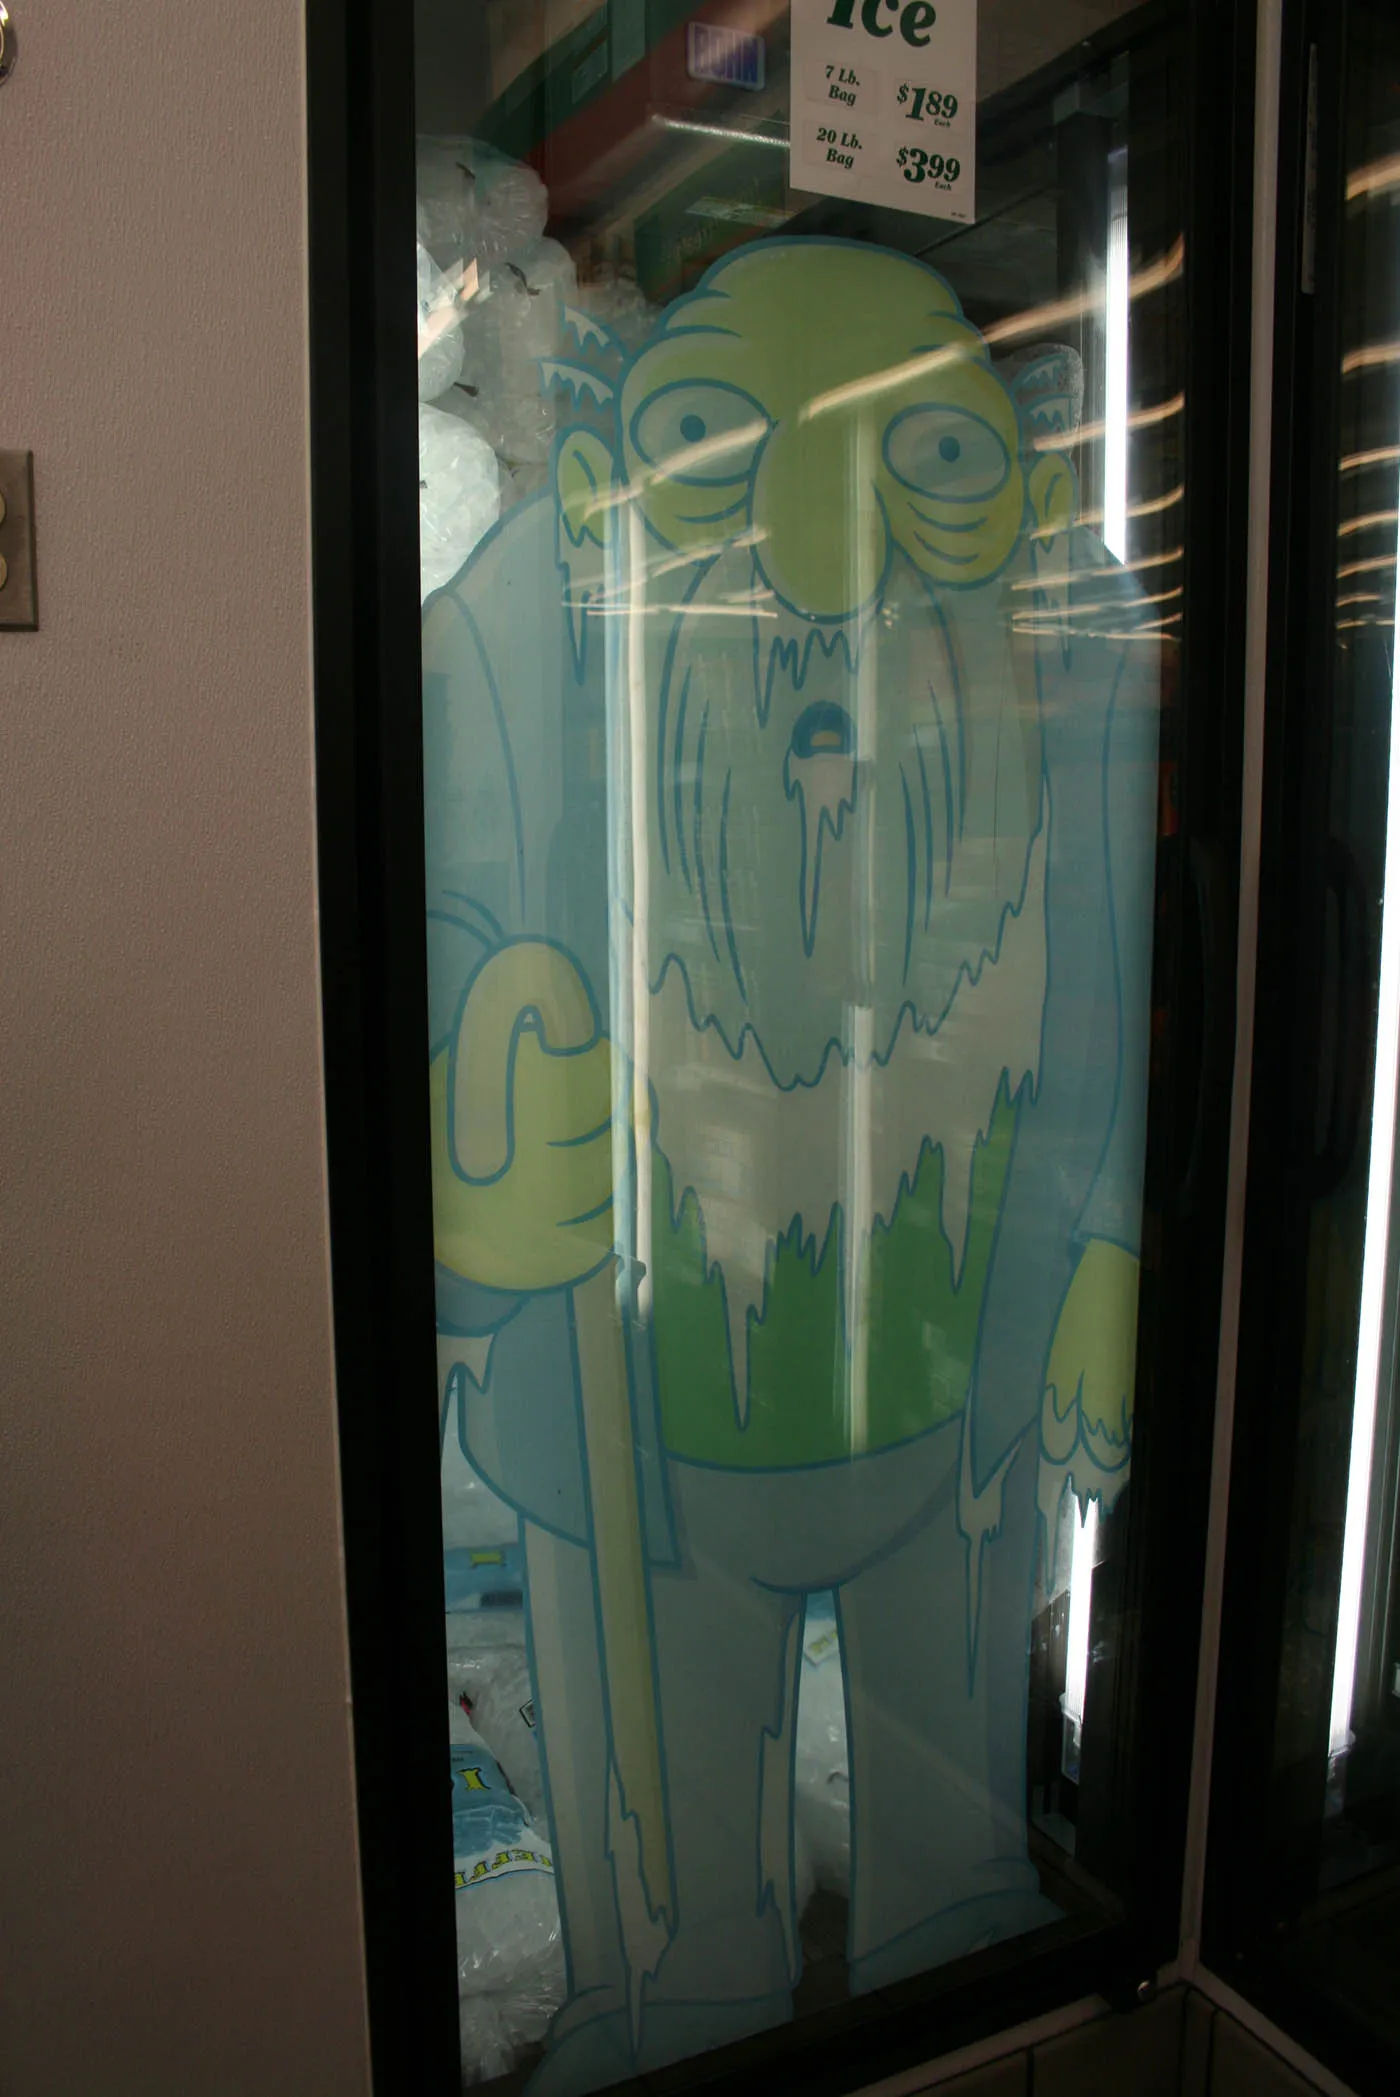 Jasper locked inside the freezer at The Simpsons 7-Eleven Kwik-E-Mart in Chicago, Illinois